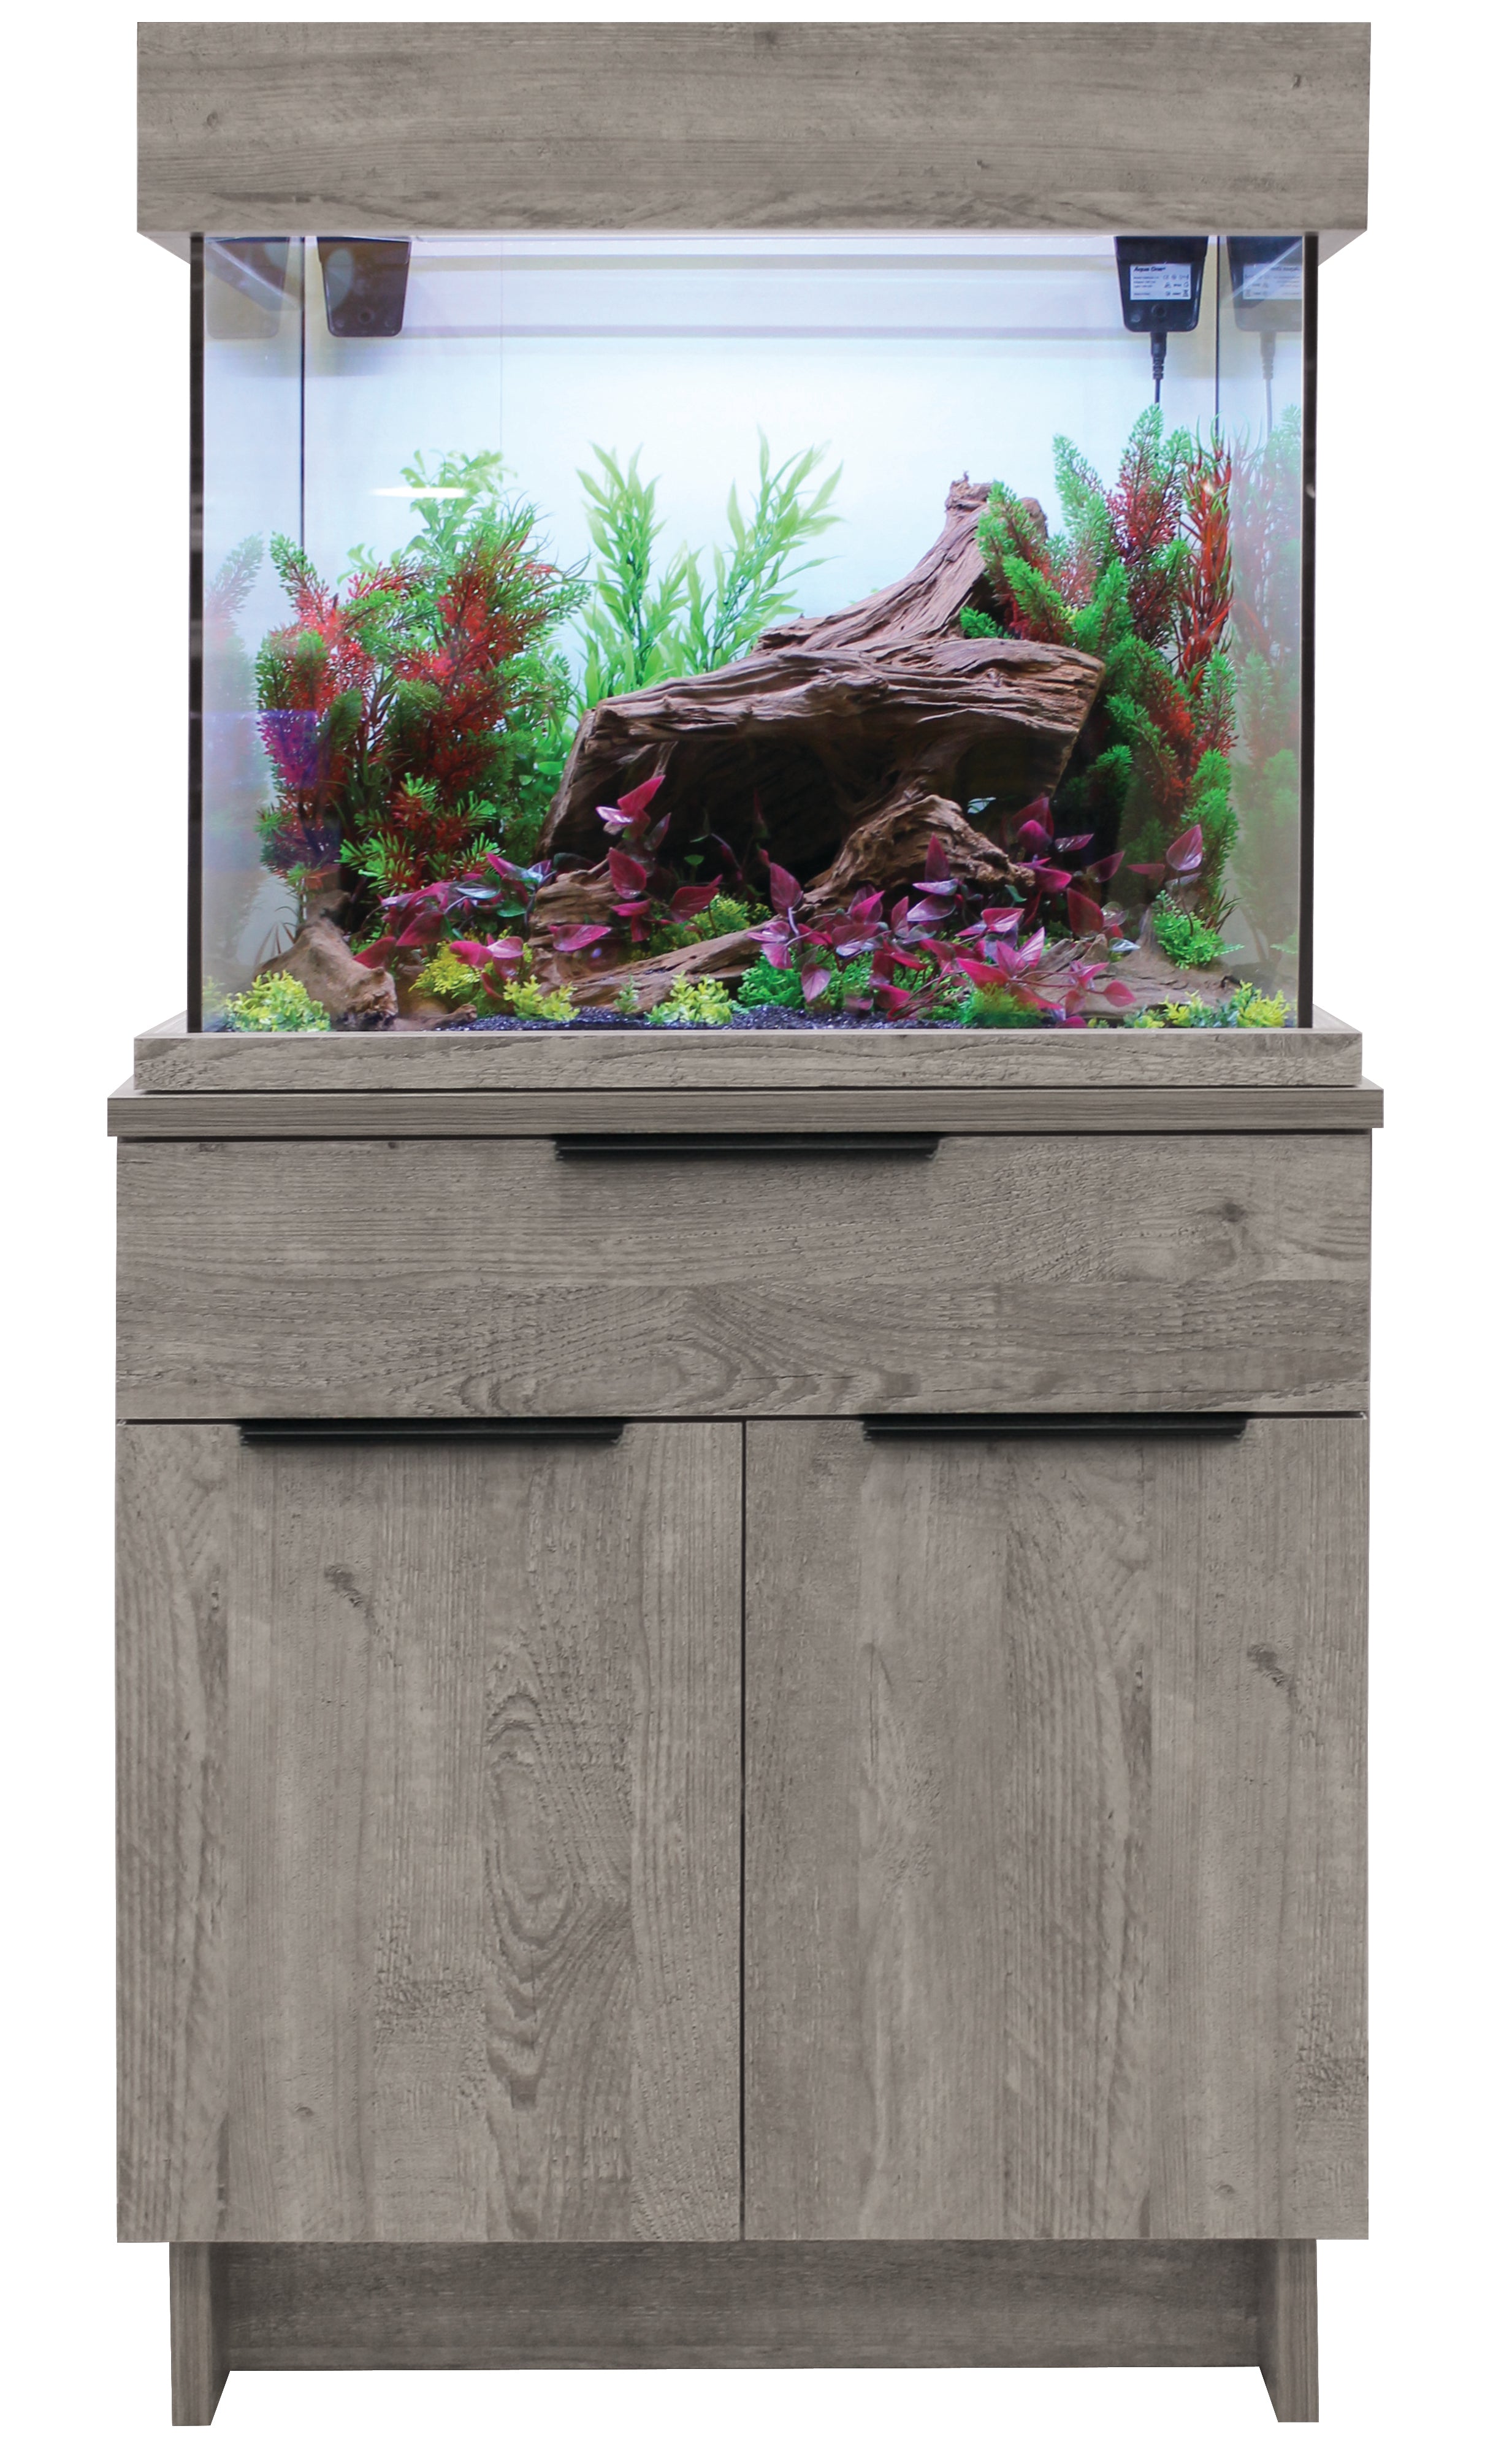 Aqua One OakStyle 110 Aquarium and Cabinet (Urban)